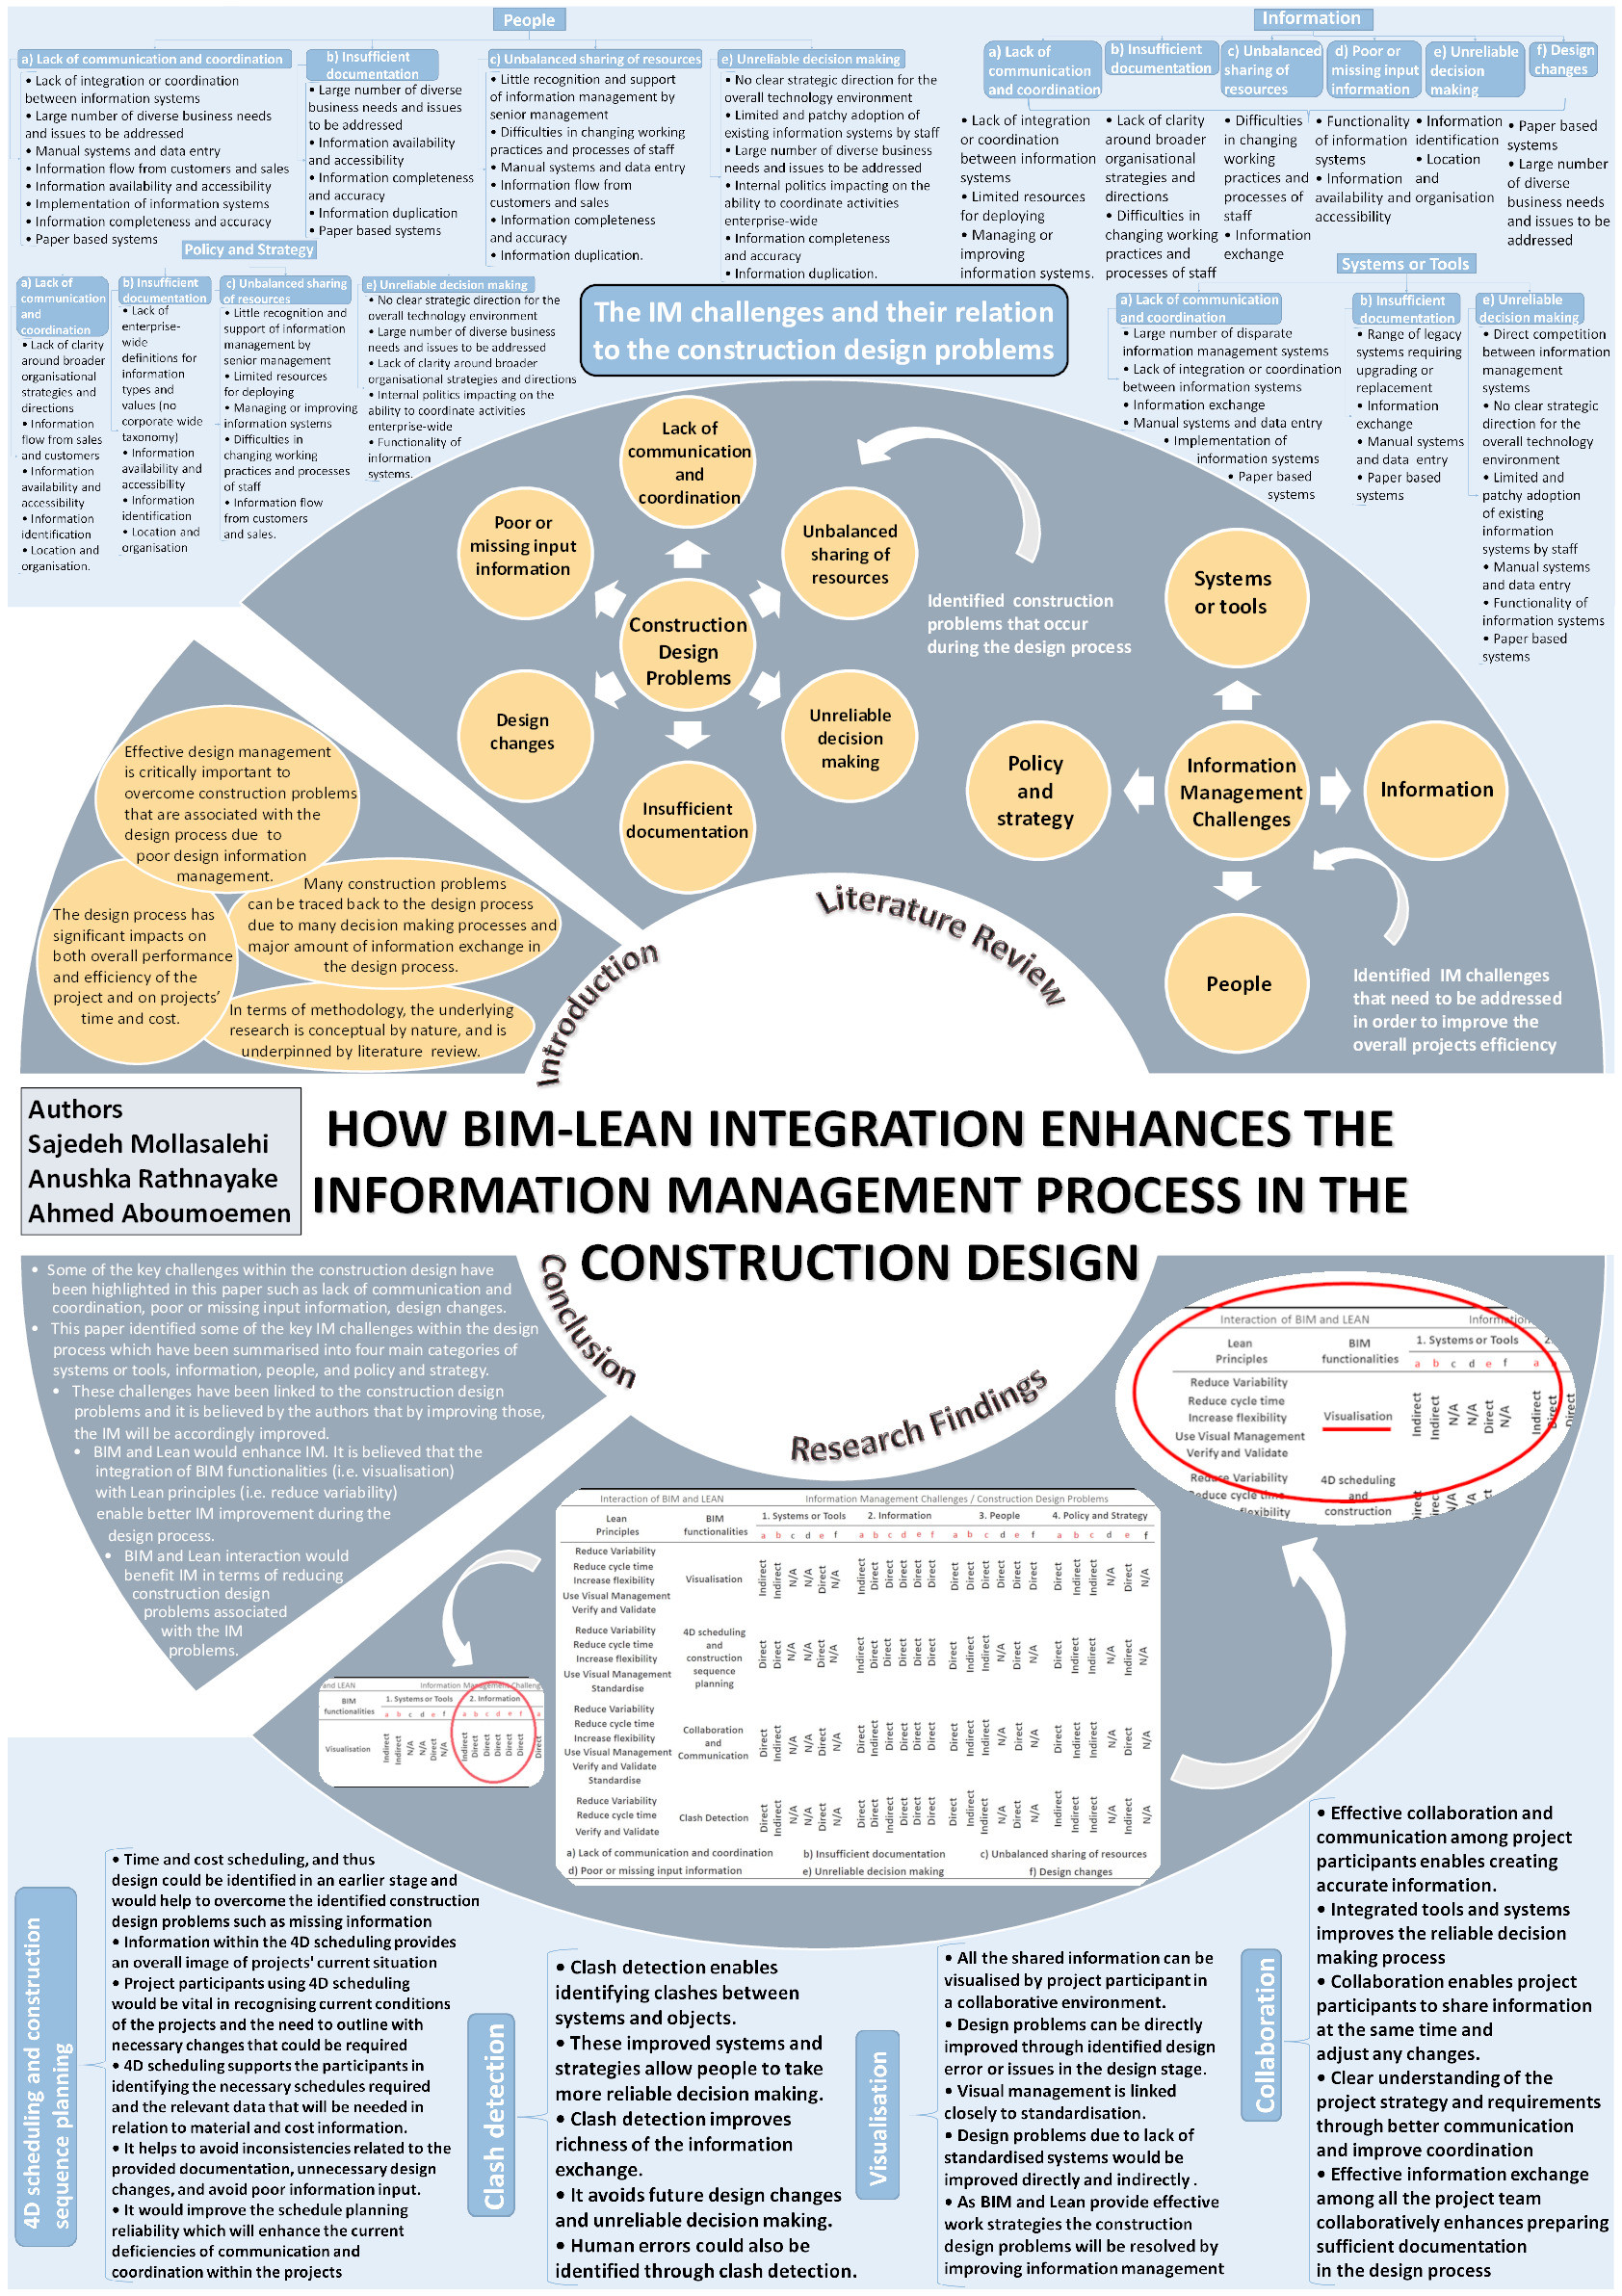 How BIM-lean integration enhances the information management process in the construction design Thumbnail